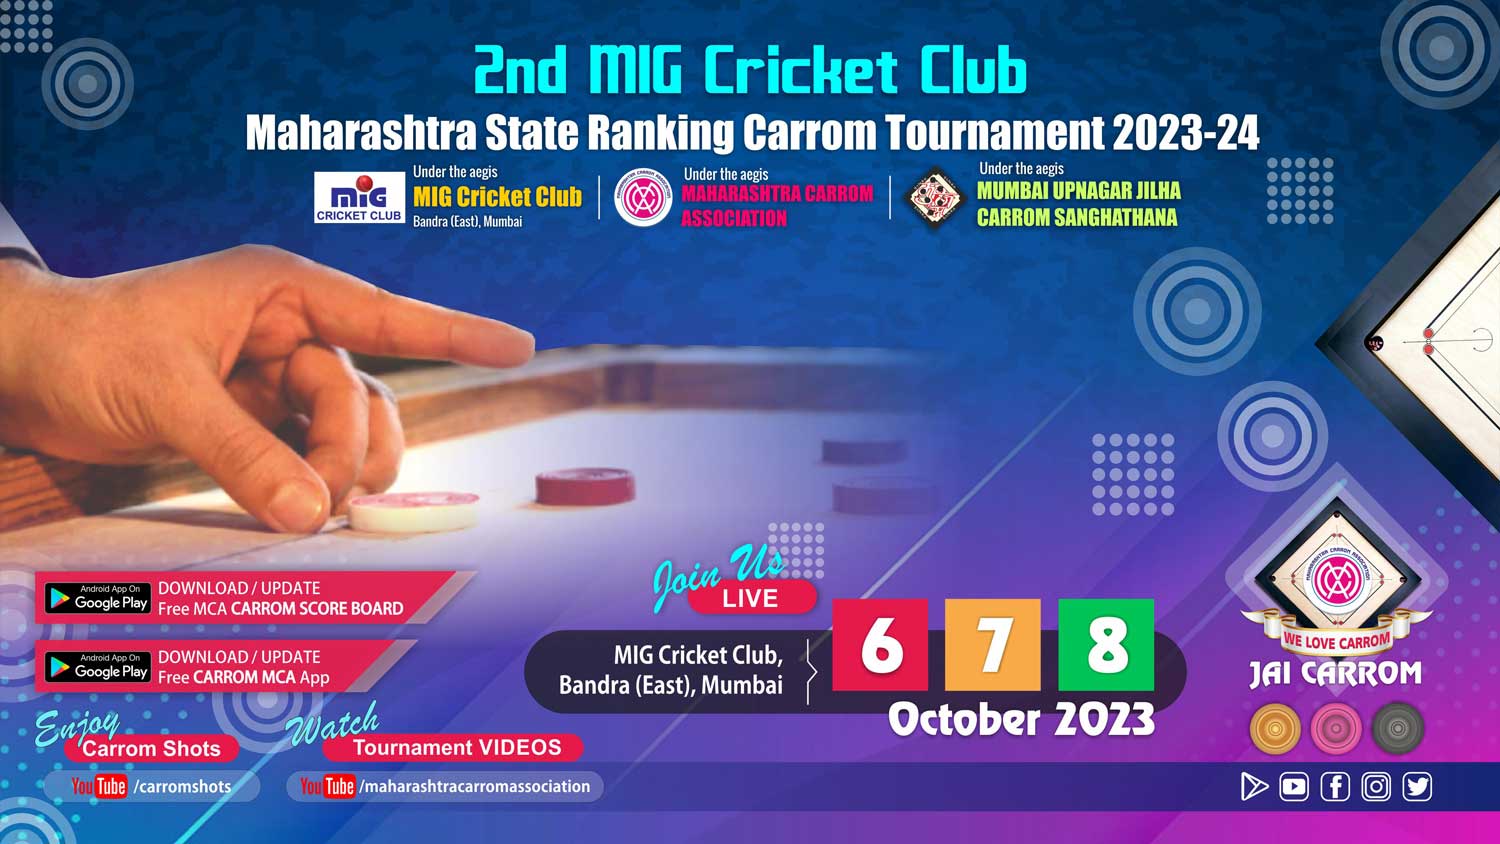 2nd MIG Cricket Club Maharashtra State Ranking Carrom Tournament 2023-24